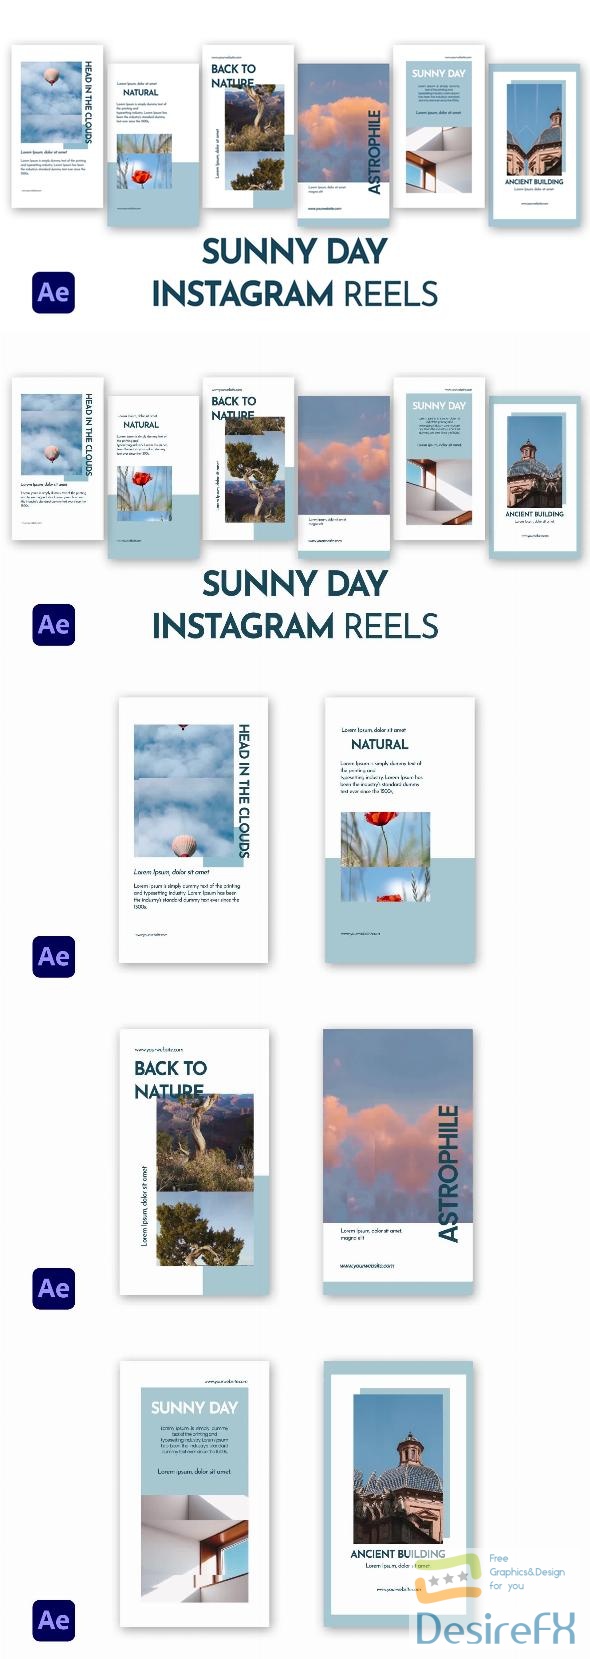 VideoHive Sunnyday - Instagram Reels Template 47192604